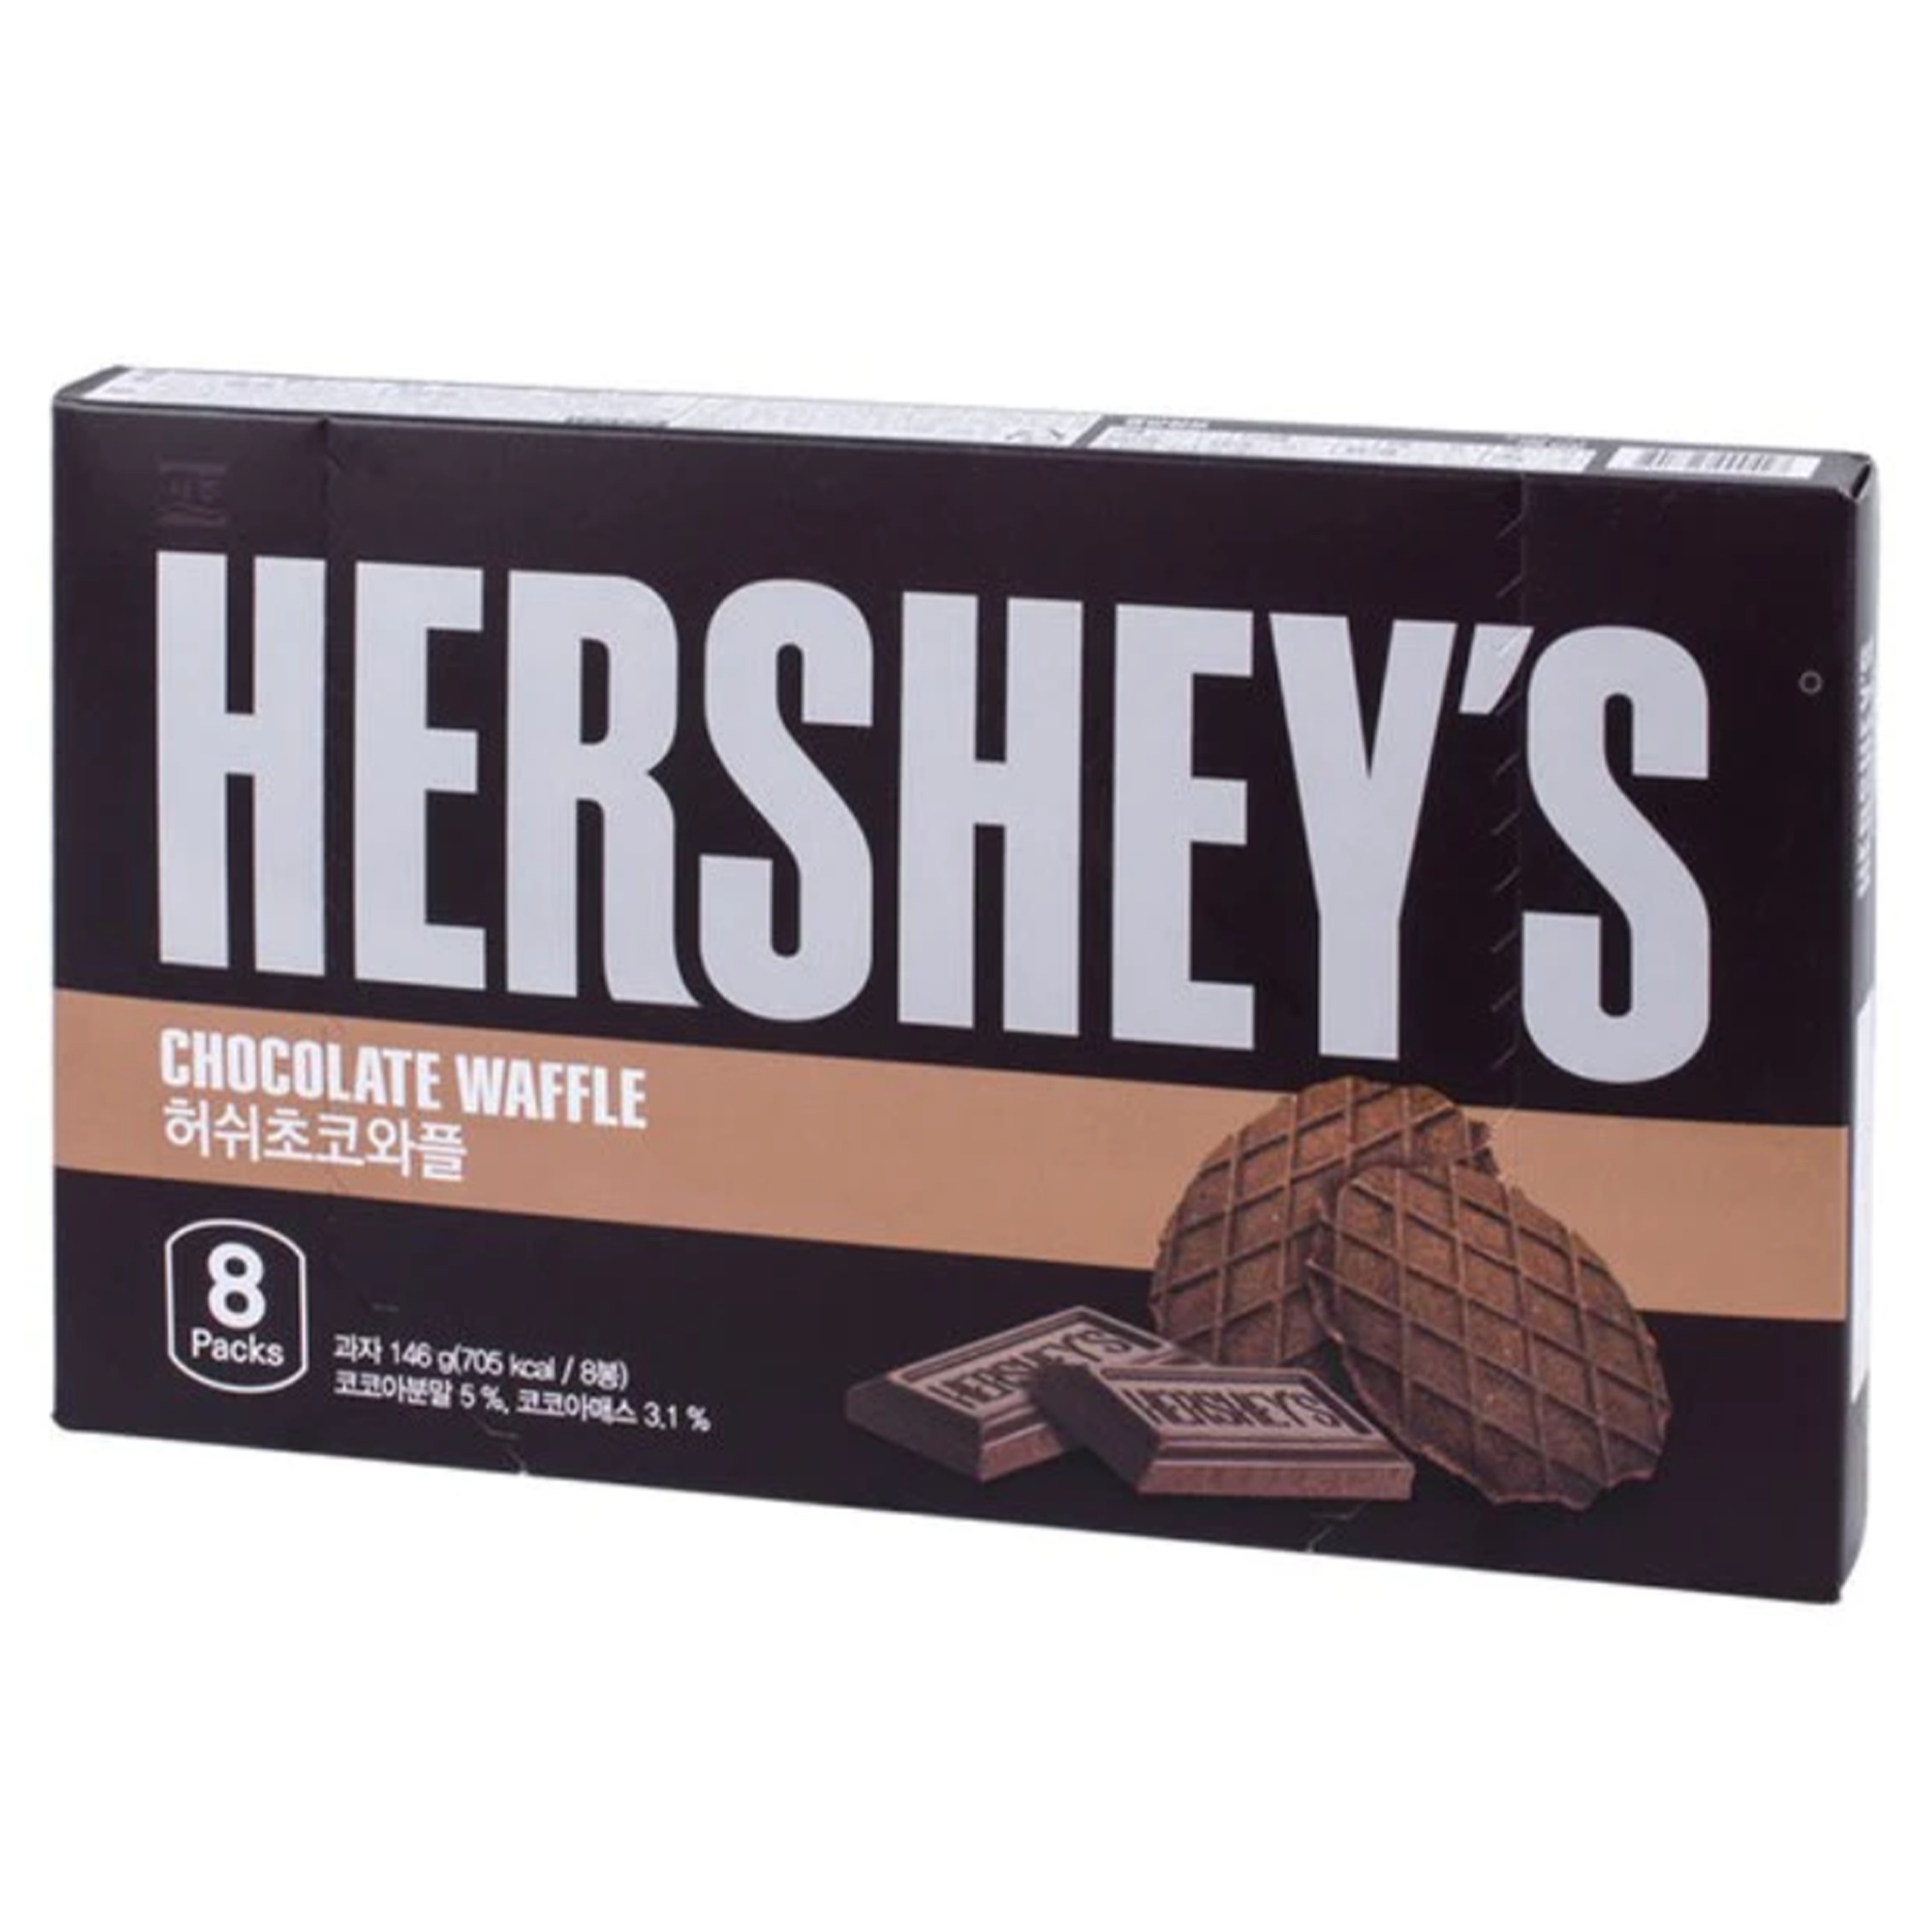 Hershey's Chocolate Waffle (Korea)